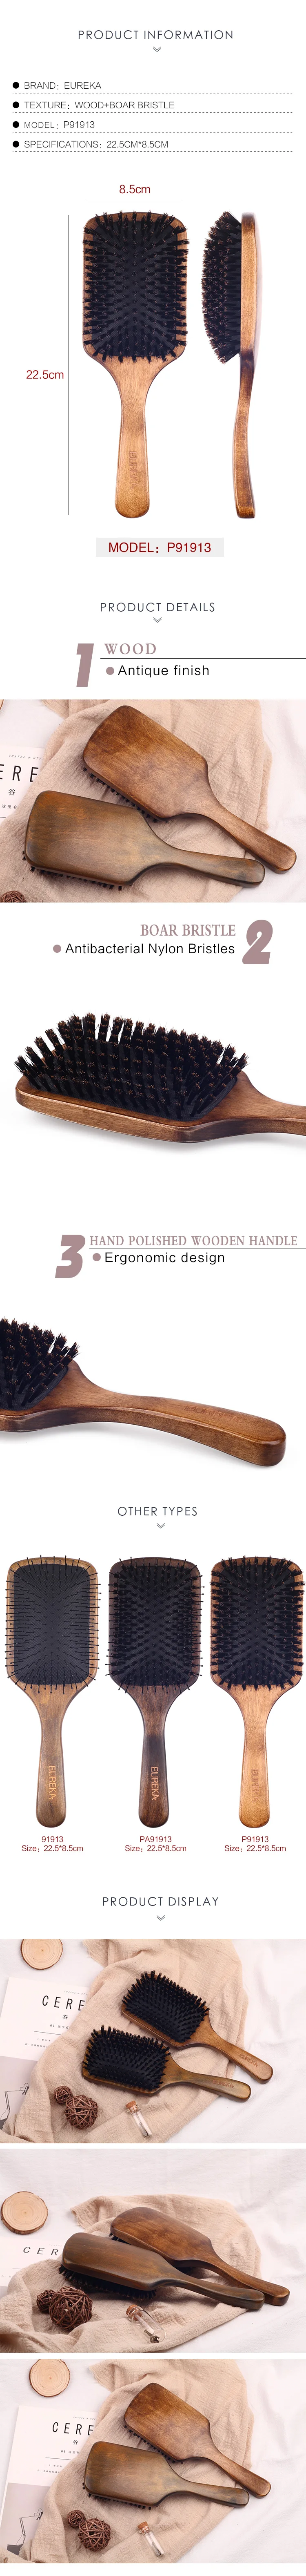 EUREKA P91913 Engraved Boar Bristle Hair Brush Wood Hair Brush Massage Classical Style Hair Brush